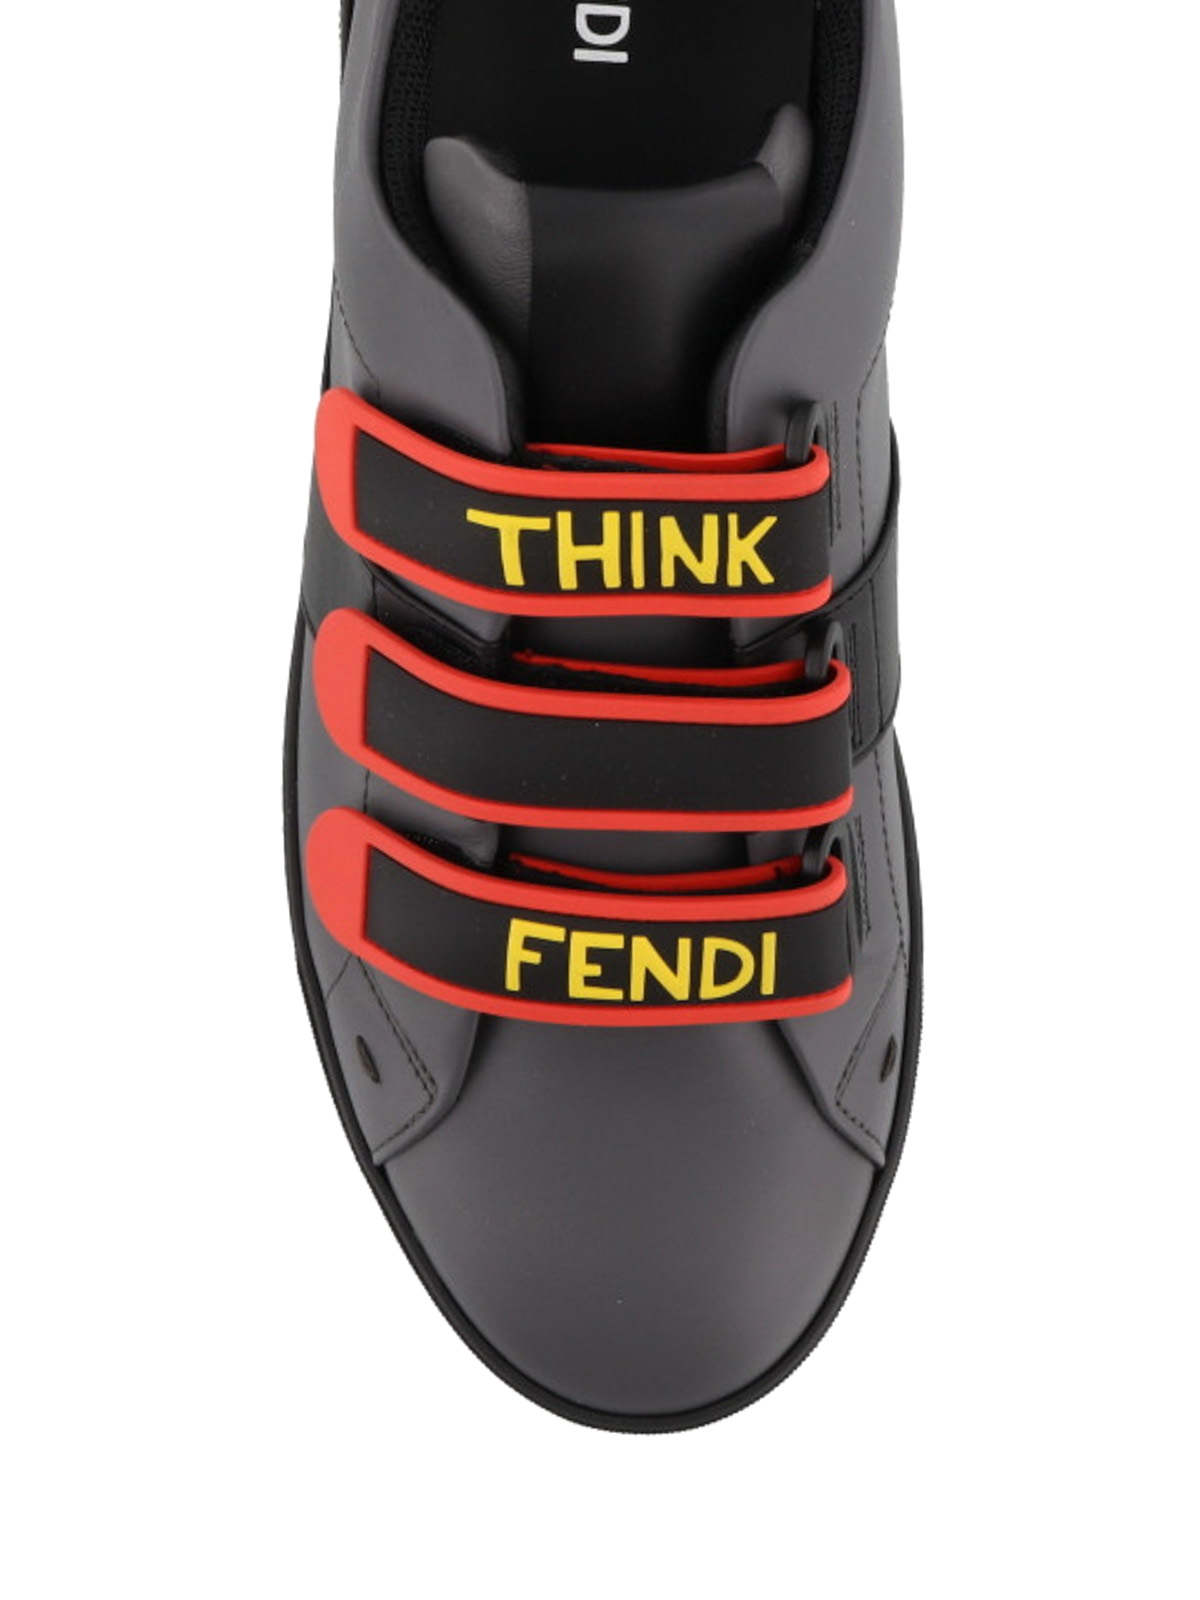 fendi think sneakers